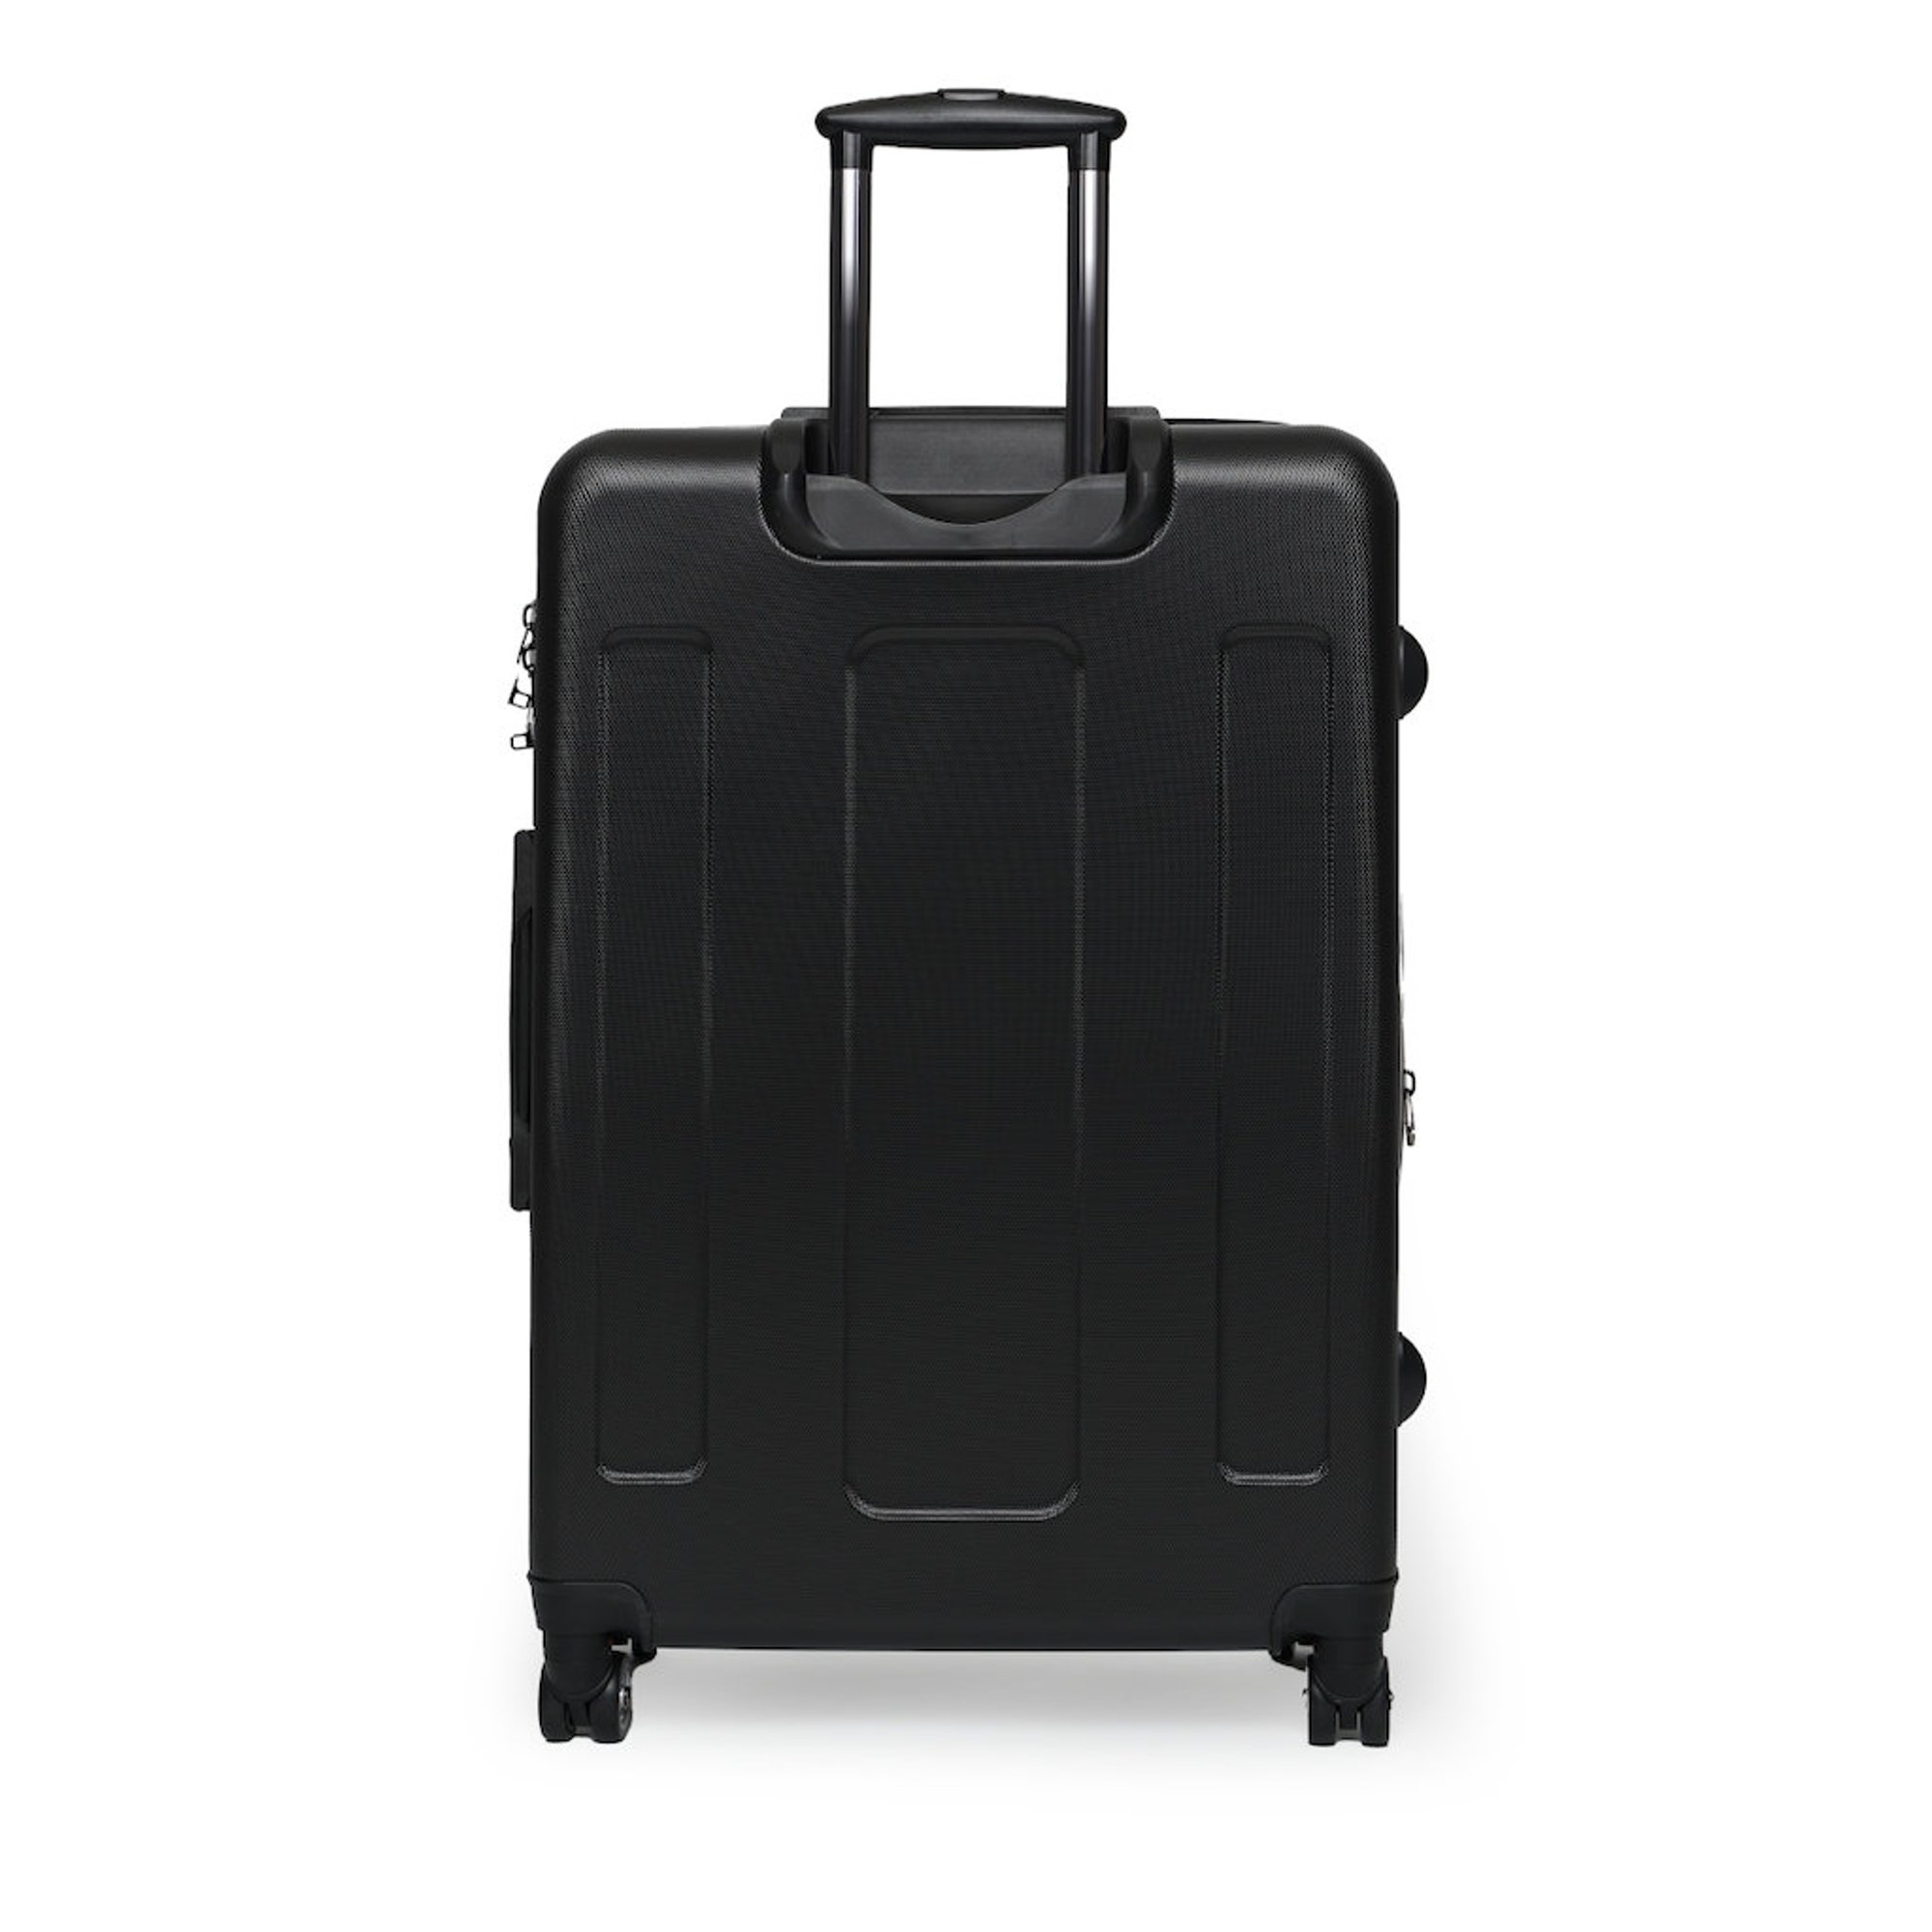 The Kona Suitcase